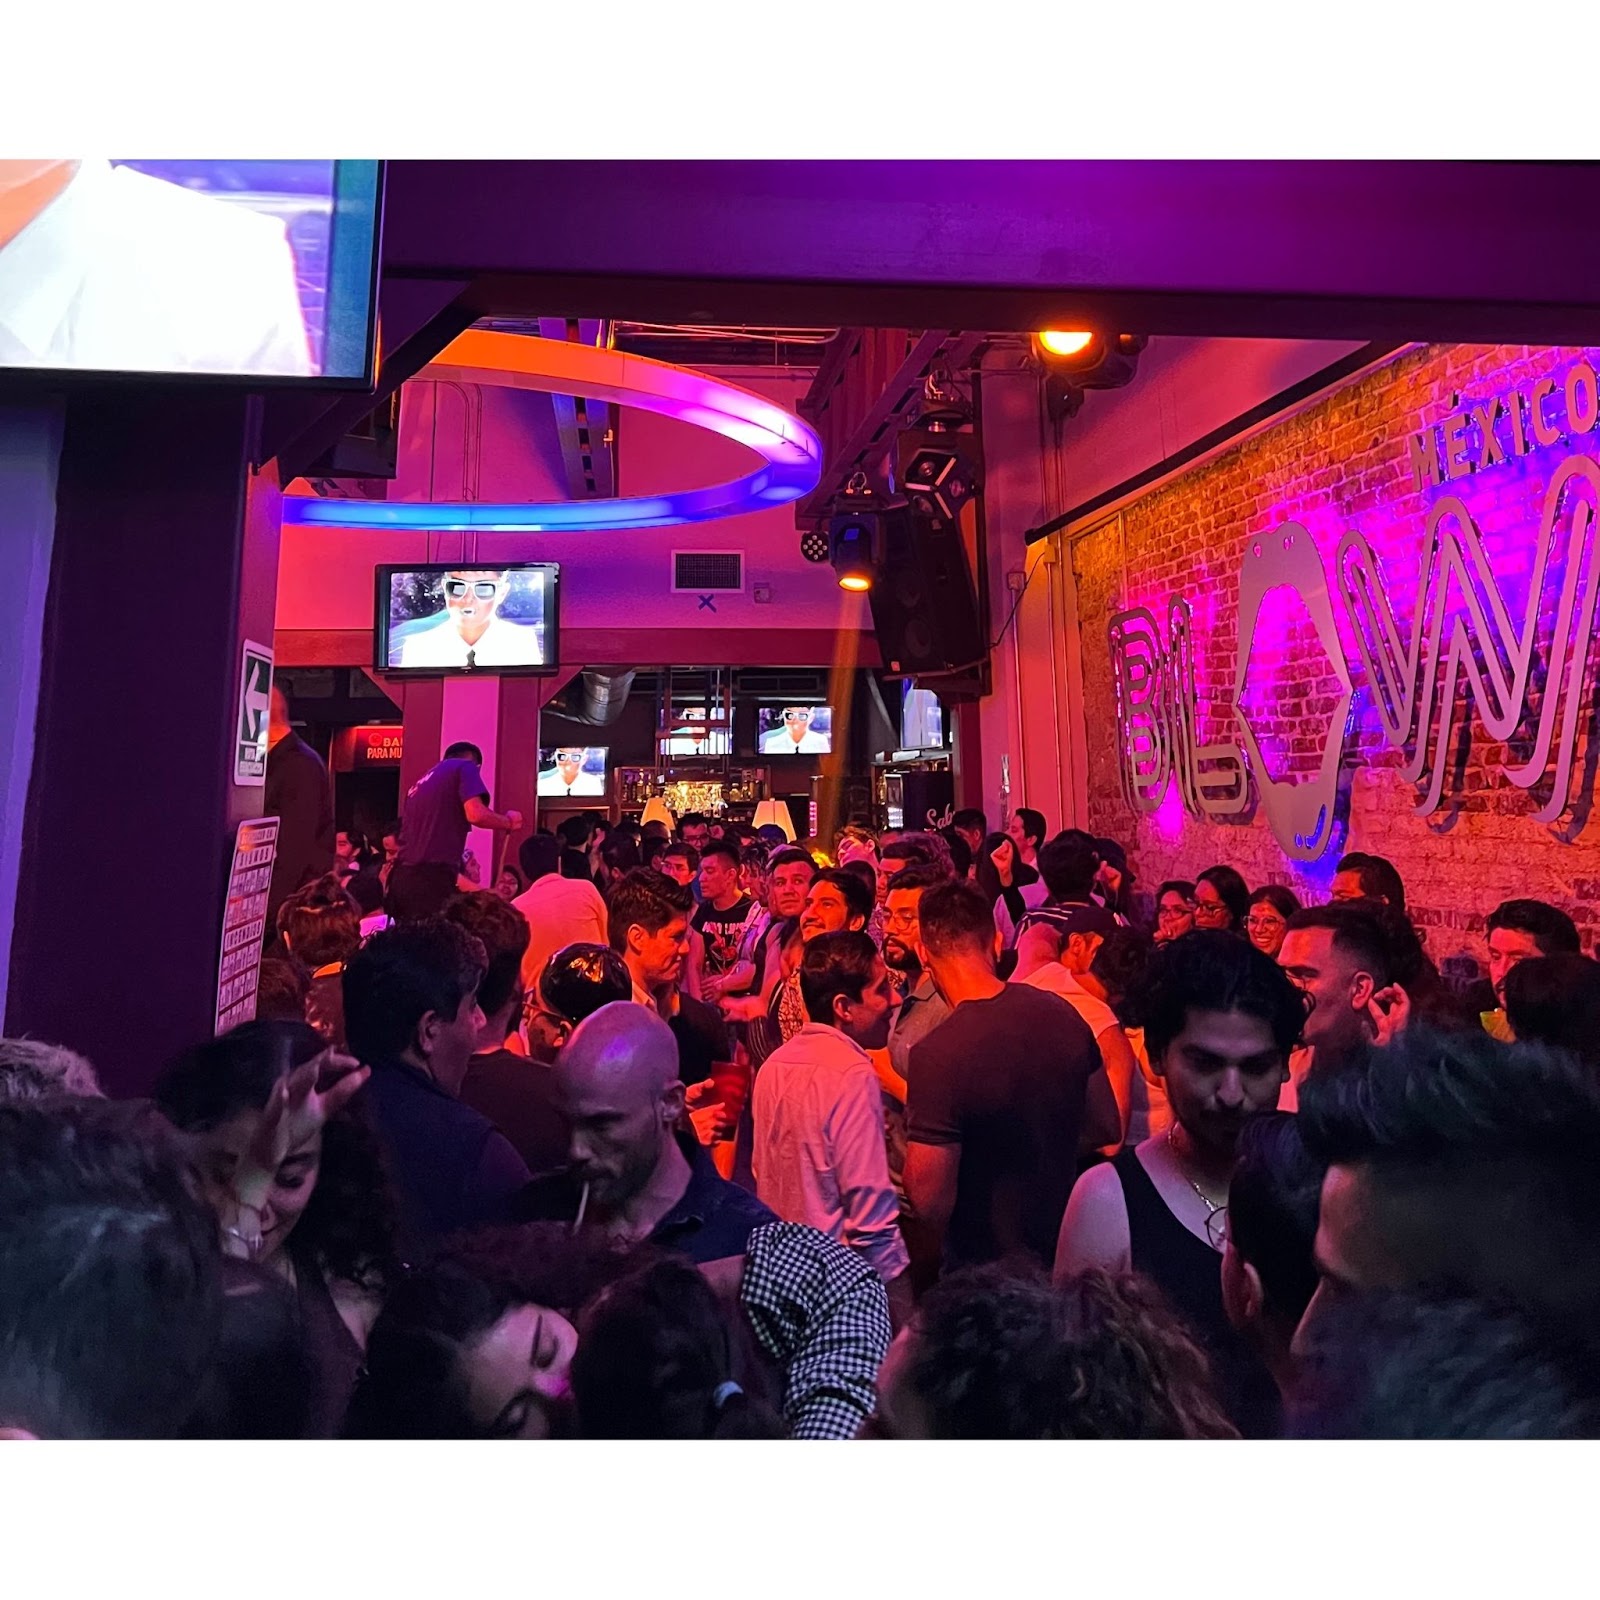 inside mexico city's best gay bar. blow bar